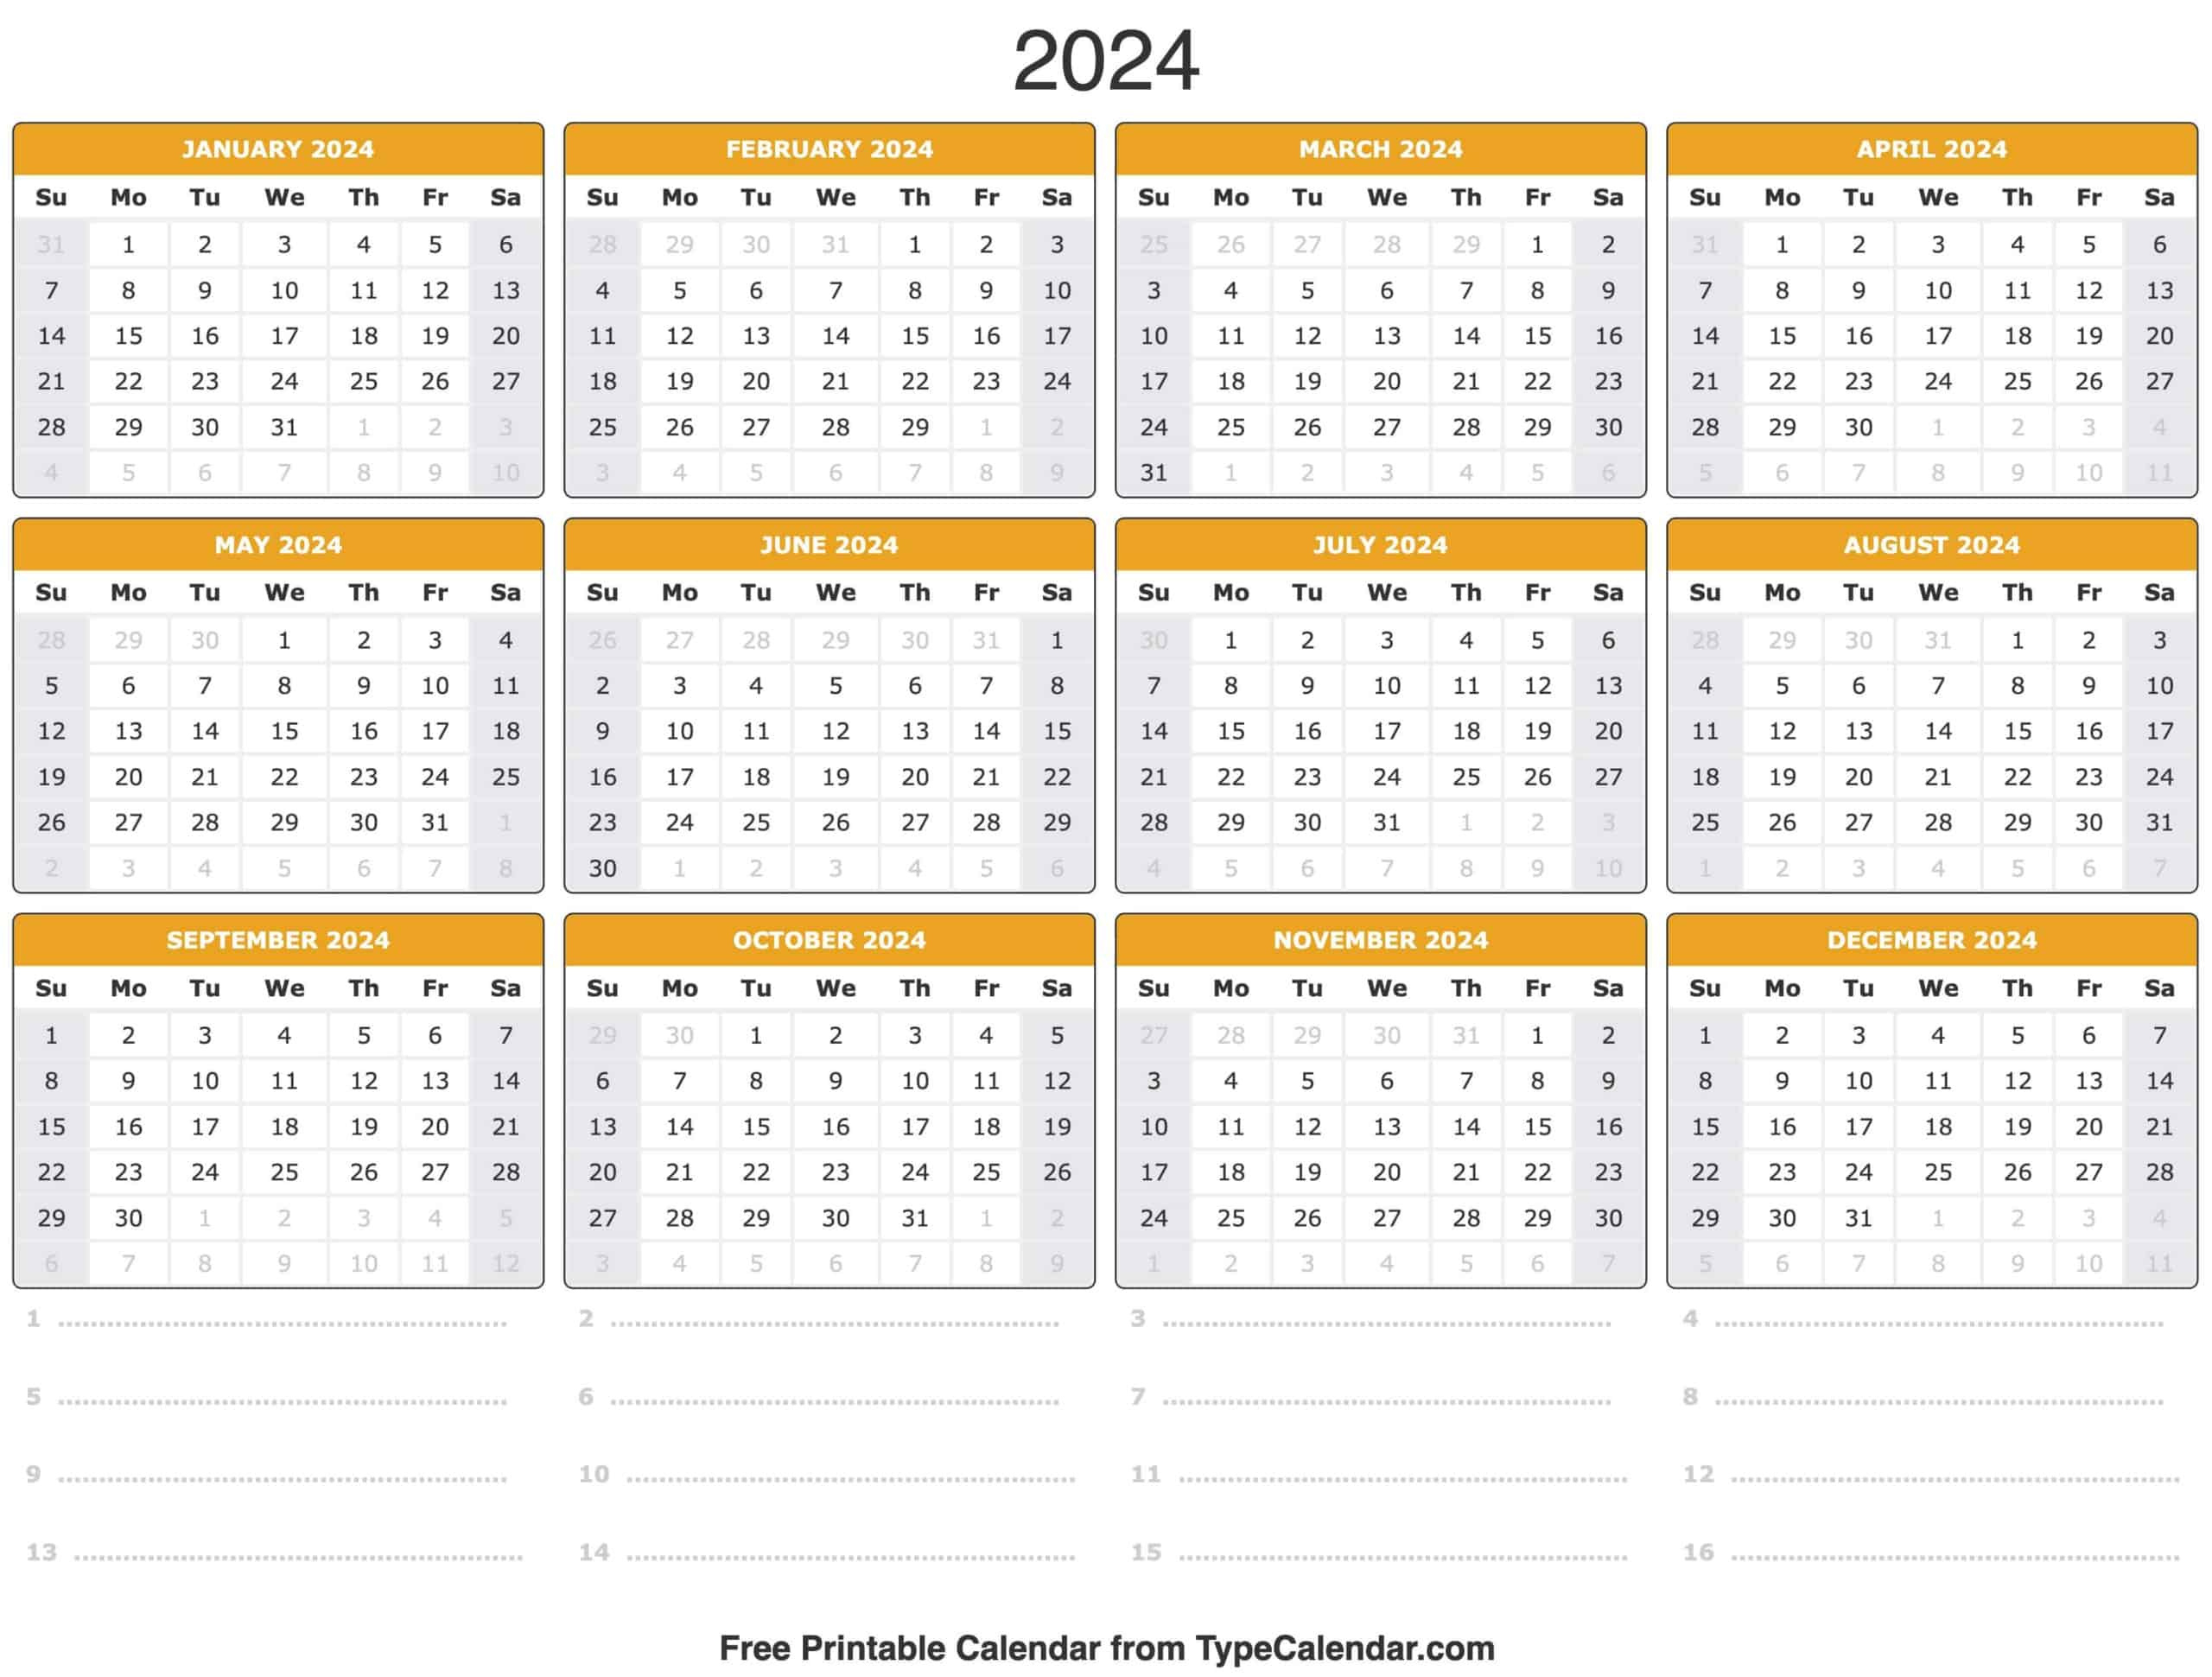 2024 Calendar: Free Printable Calendar With Holidays in Free Printable Calendar 2024 Microsoft Word